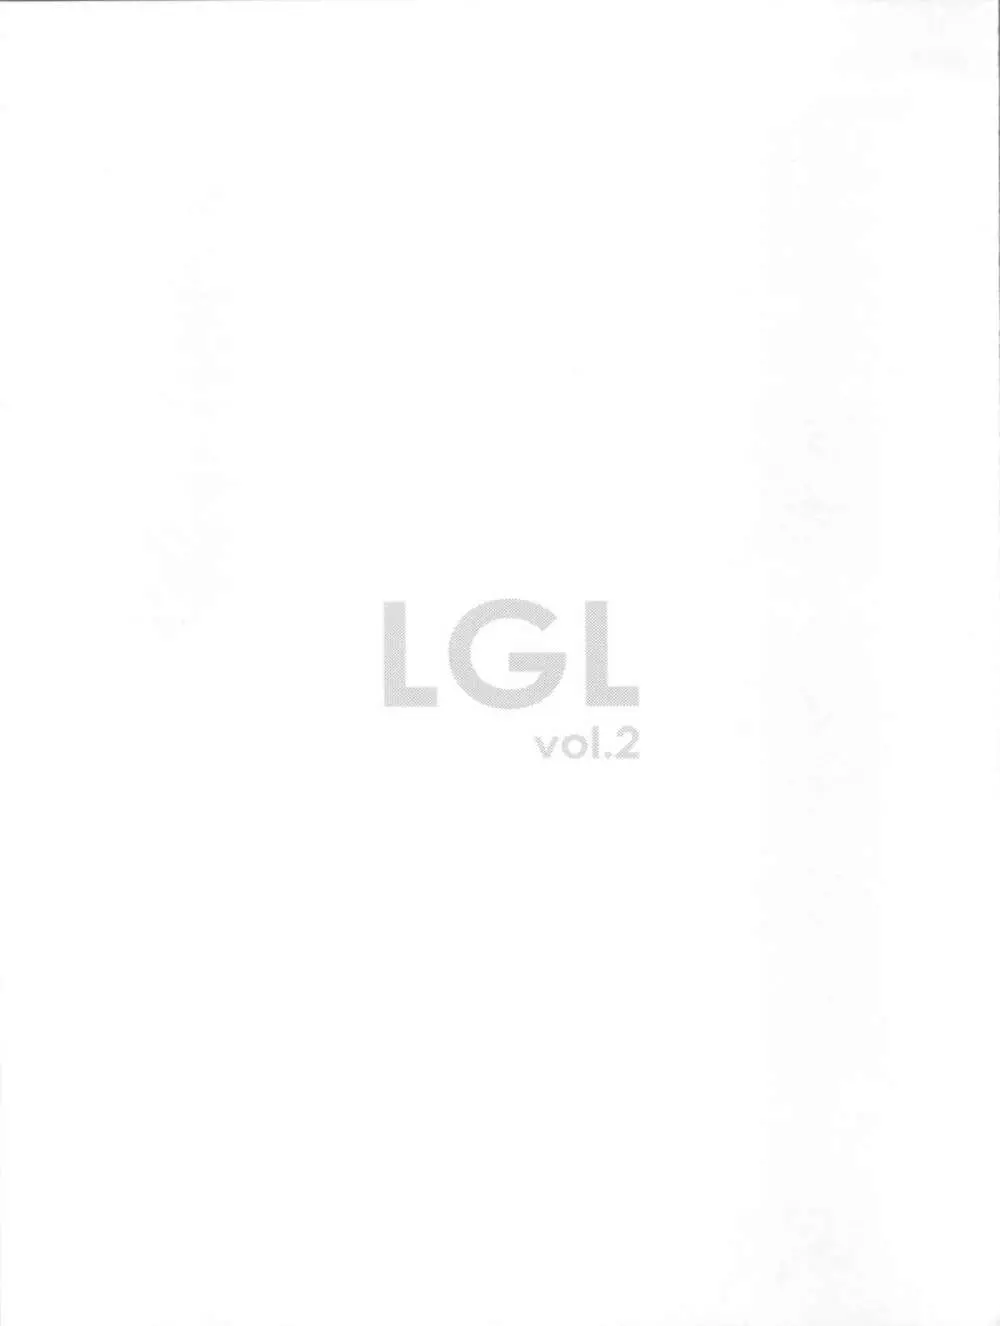 Lovely Girls’ Lily vol.2 22ページ